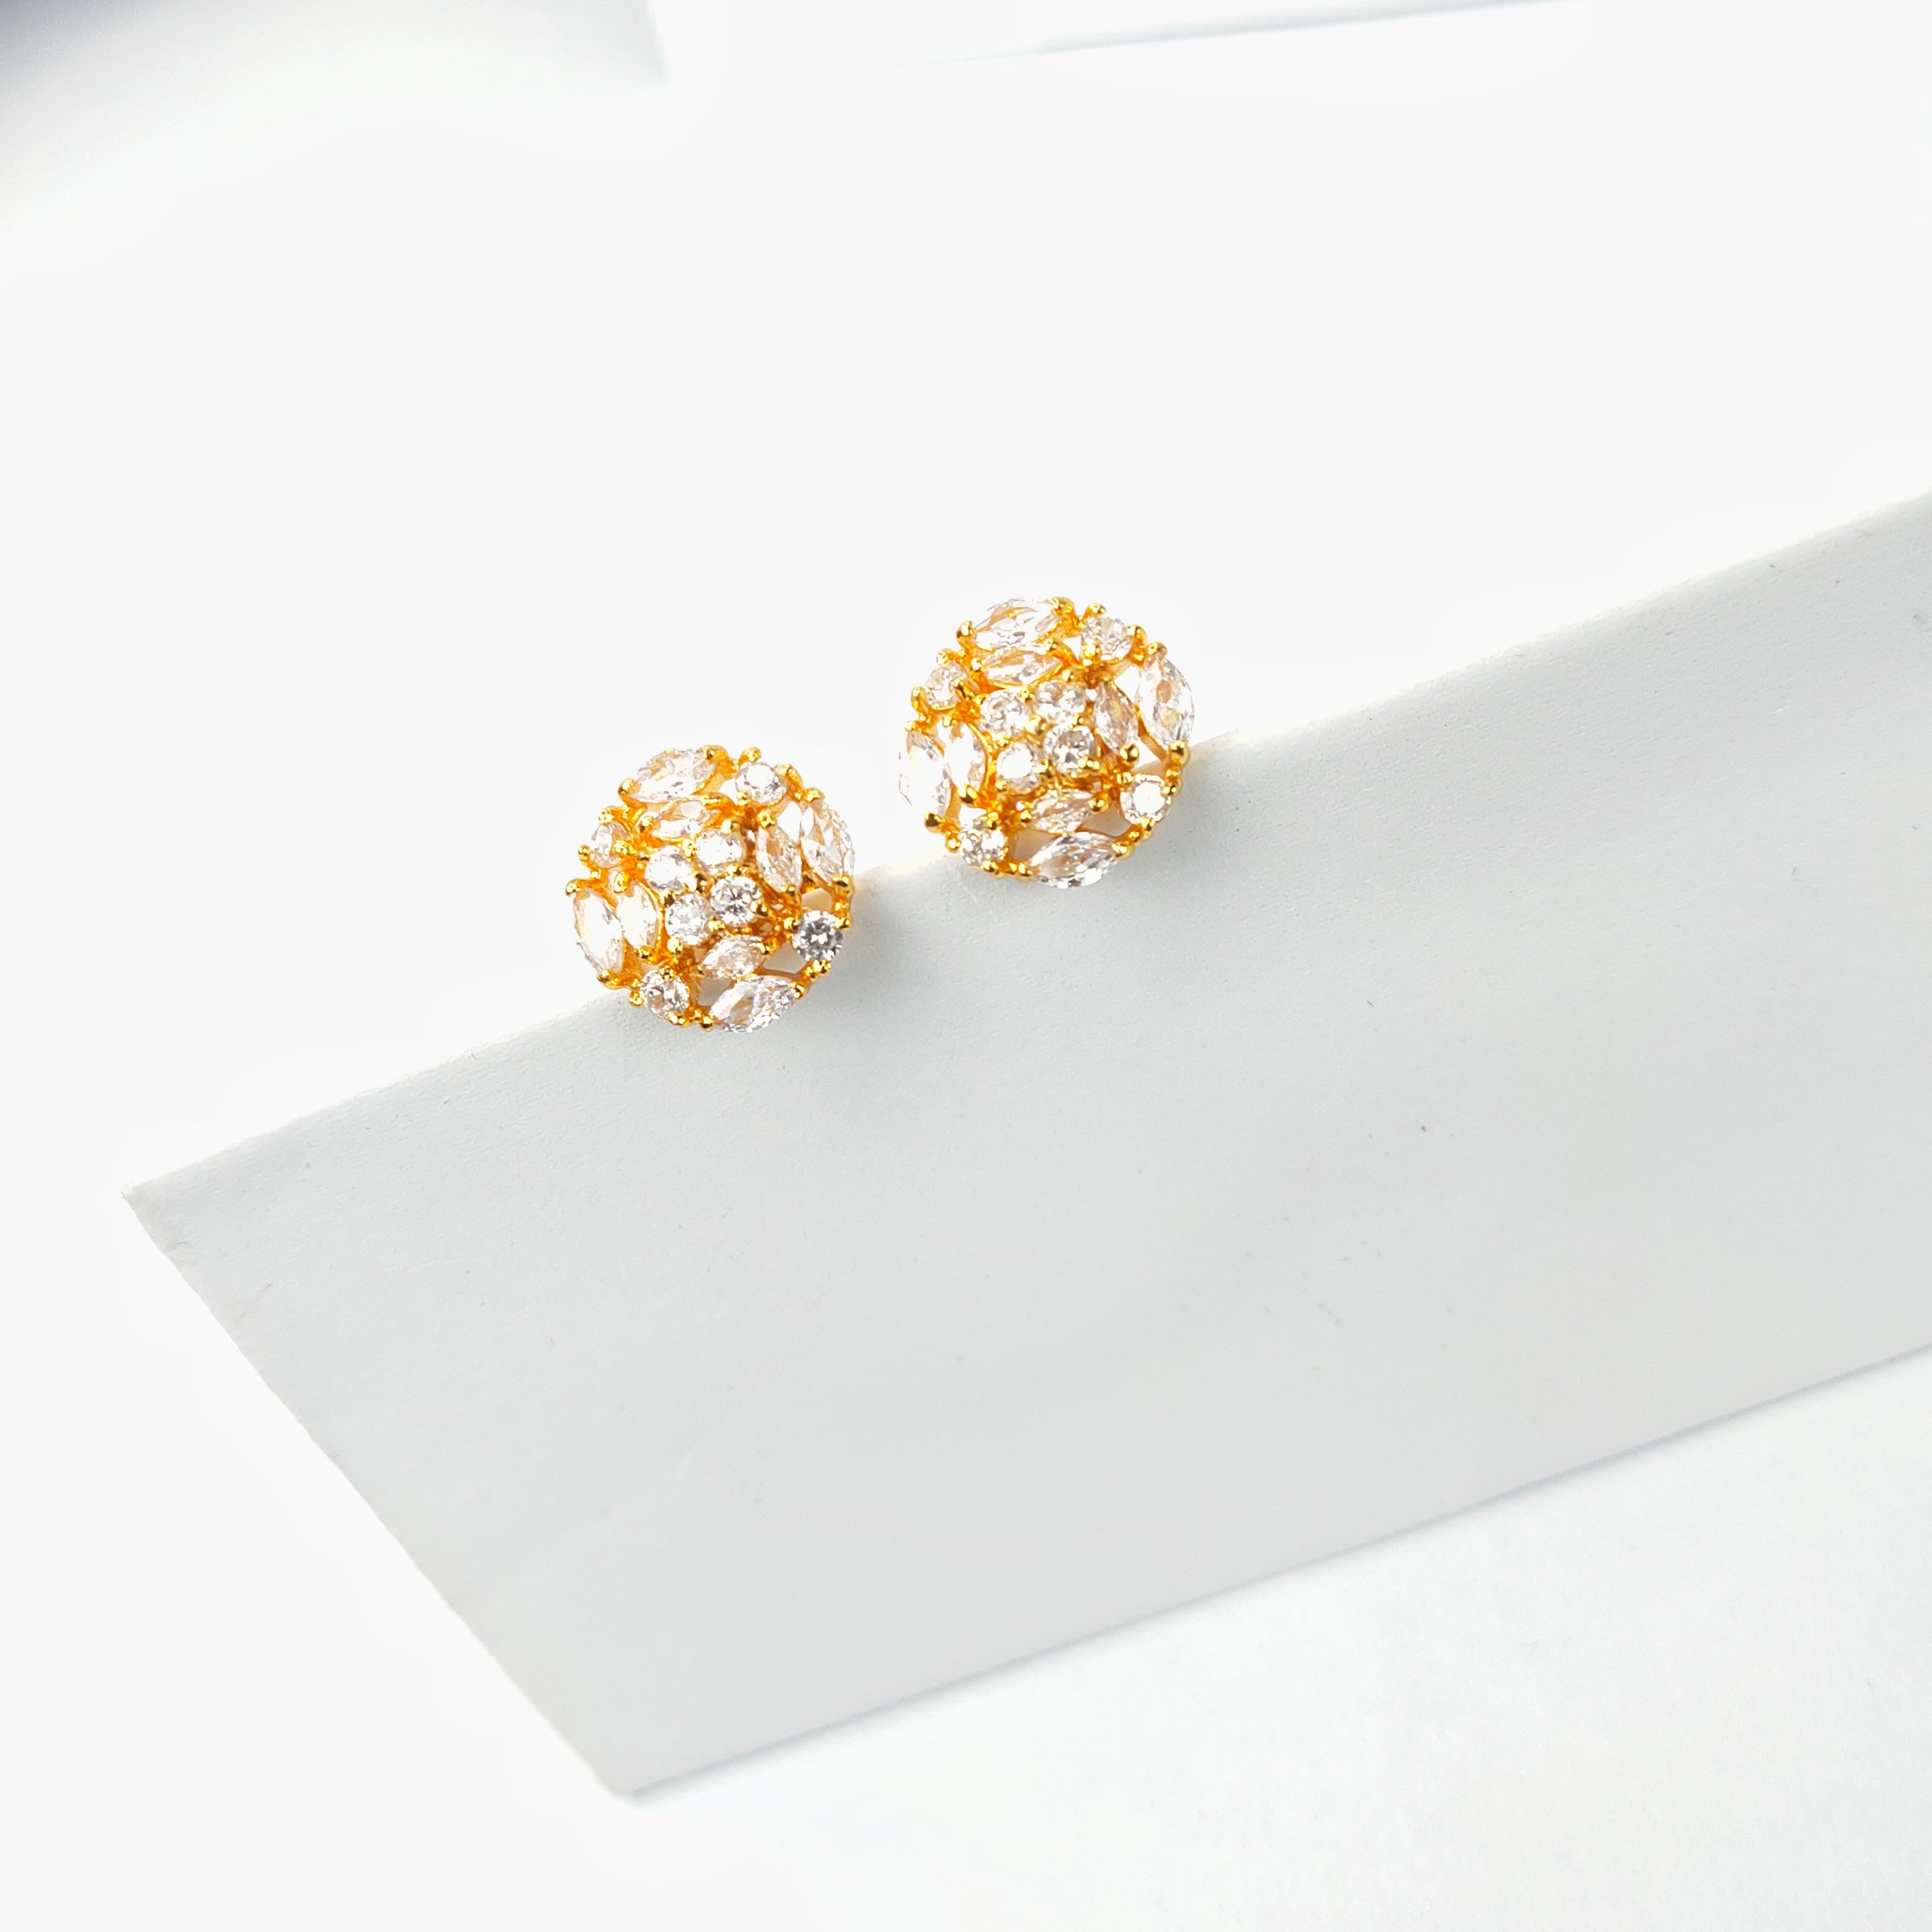 One Gram Gold Ruby Chandbalis, One Gram Gold Earrings, 1 Gram Gold Earrings  | Indian jewelry, Gold earrings designs, Gold jewelry fashion